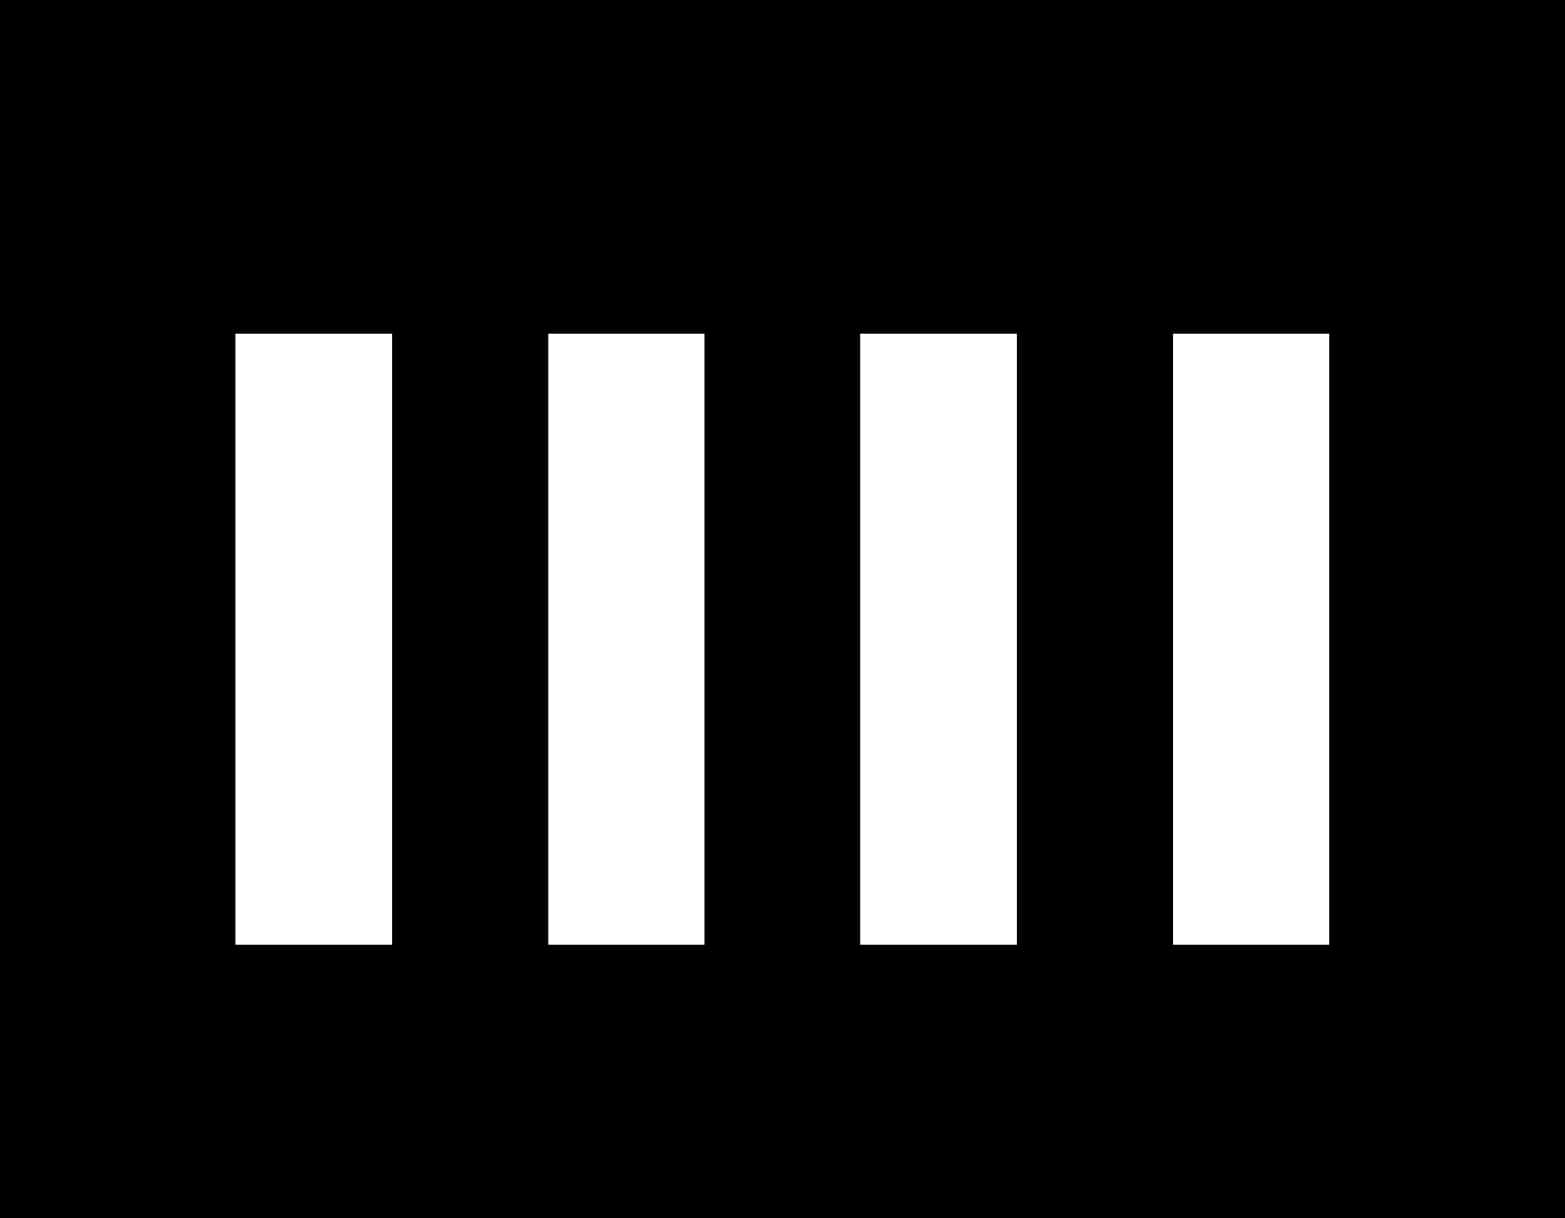 Four Vertical Bars Black Background PNG